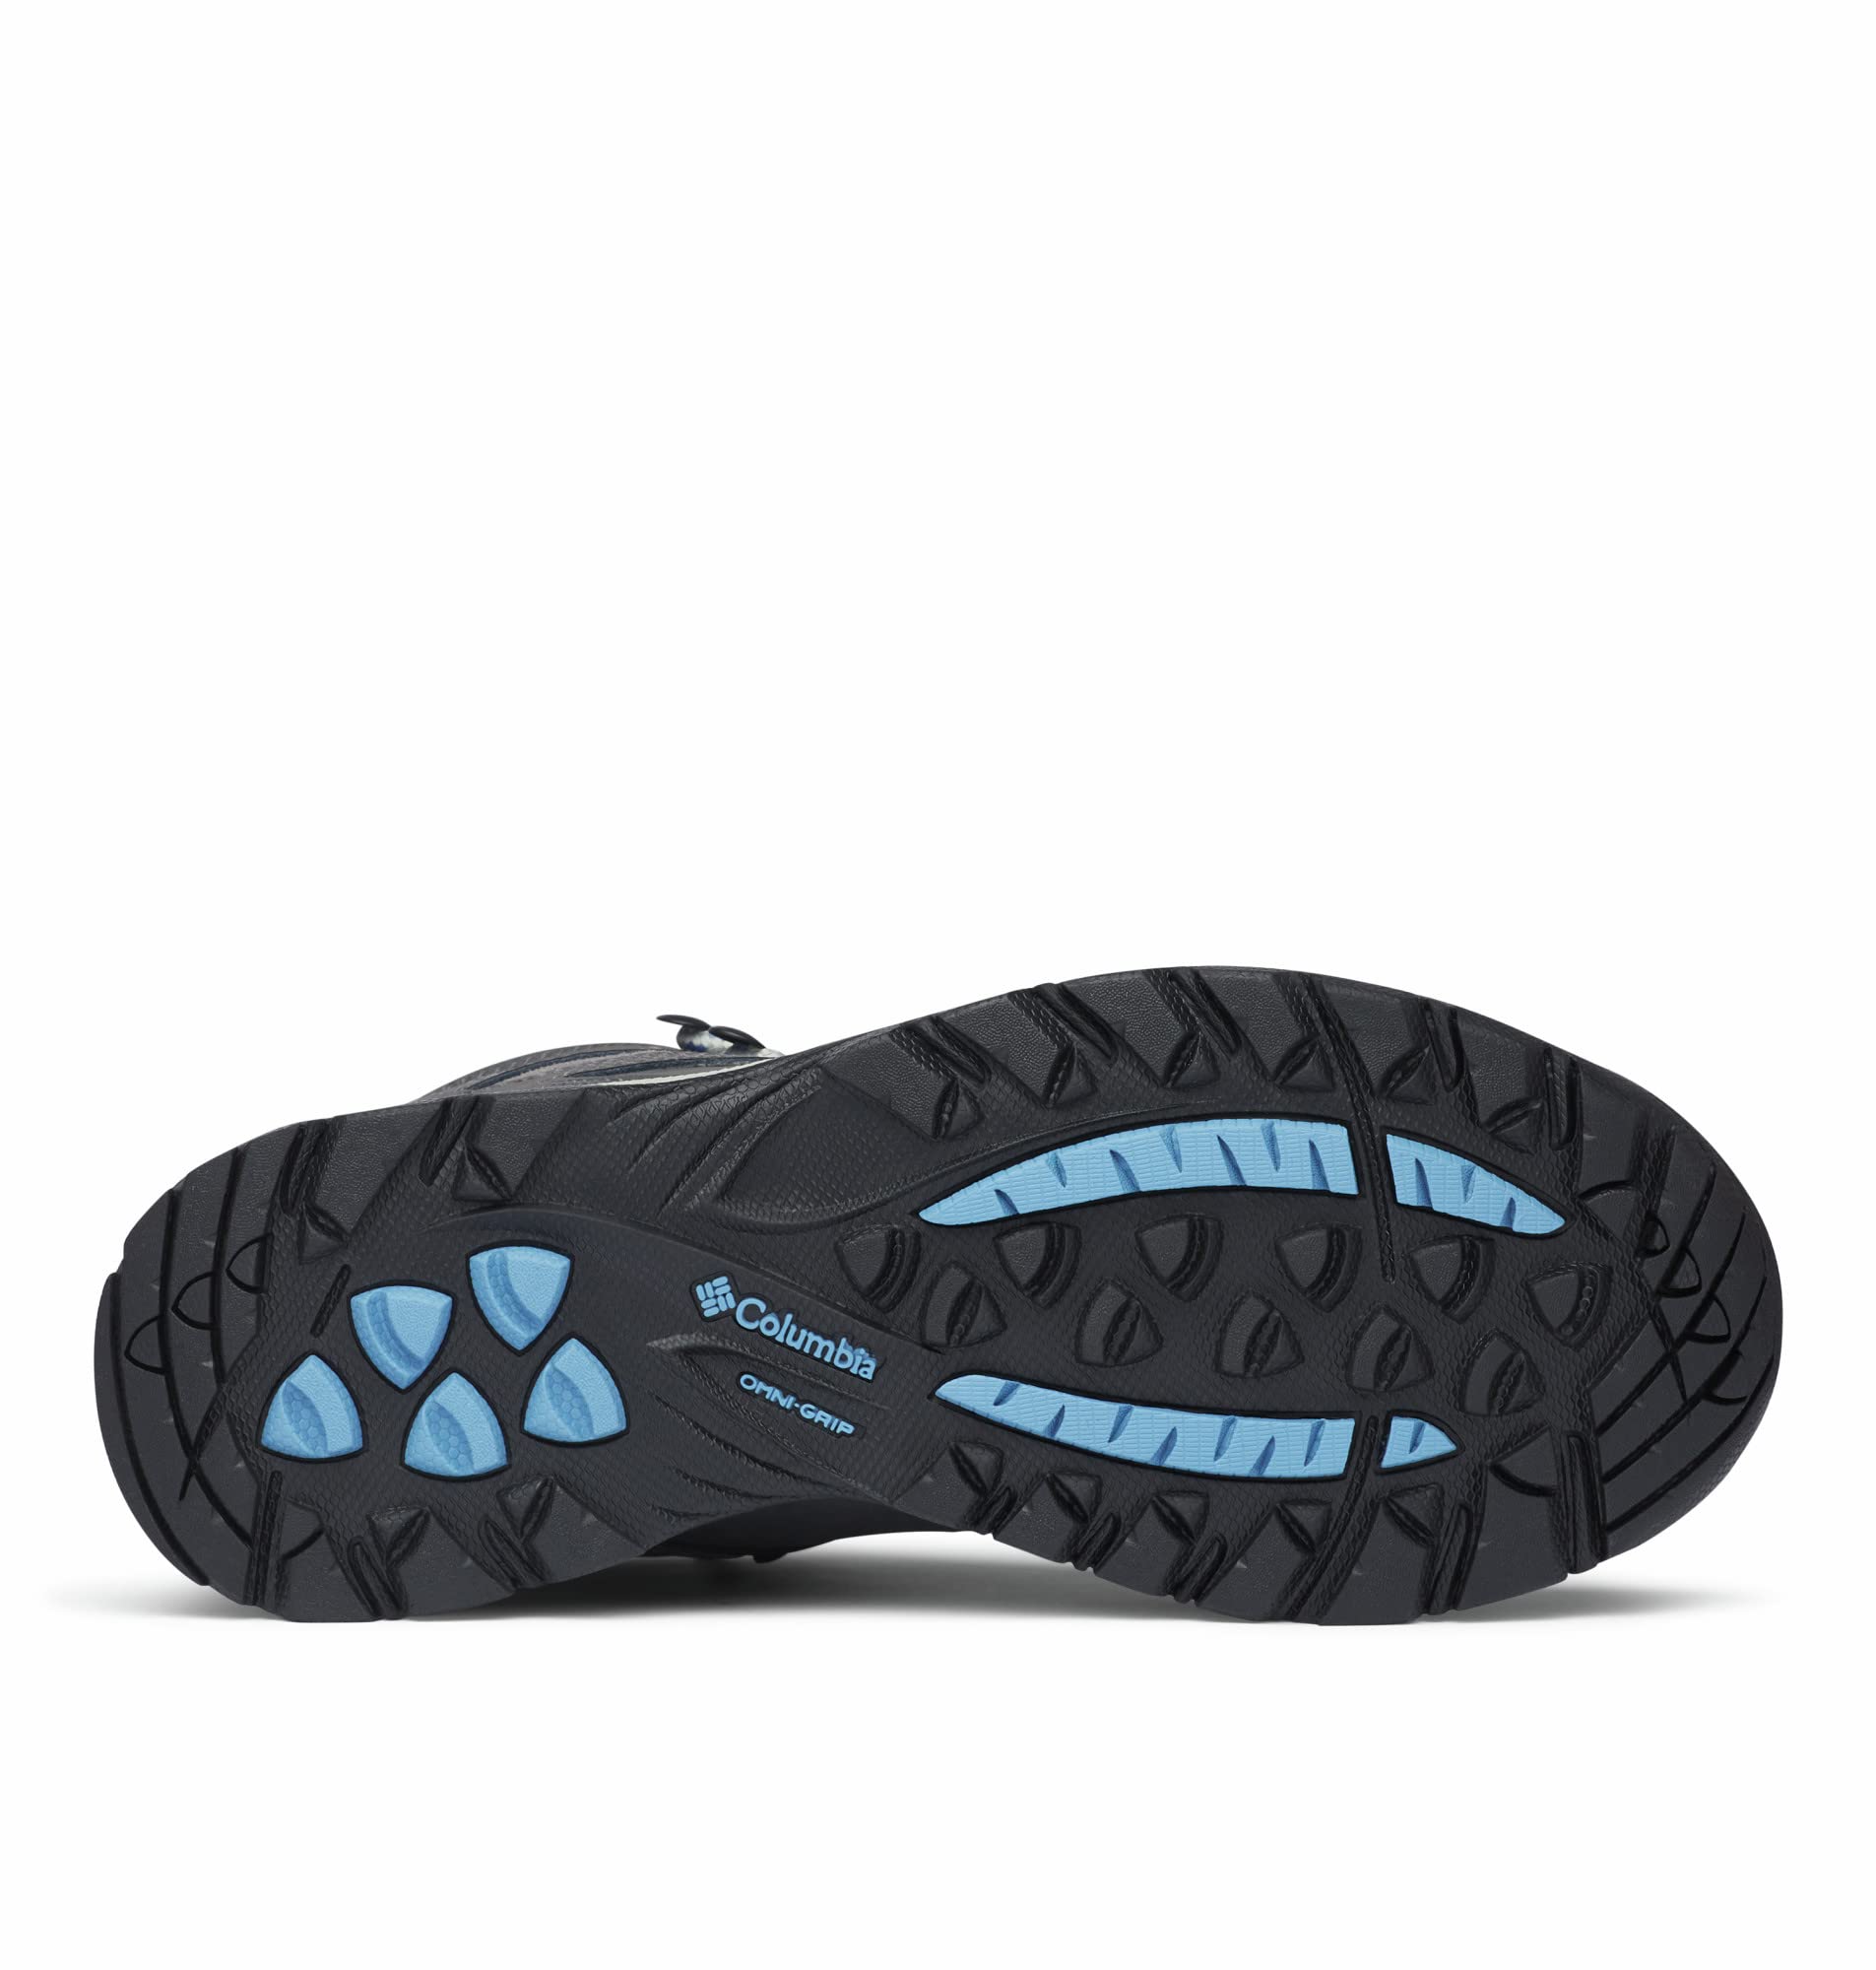 Columbia Women's Newton Ridge Lightweight Waterproof Shoe Hiking Boot